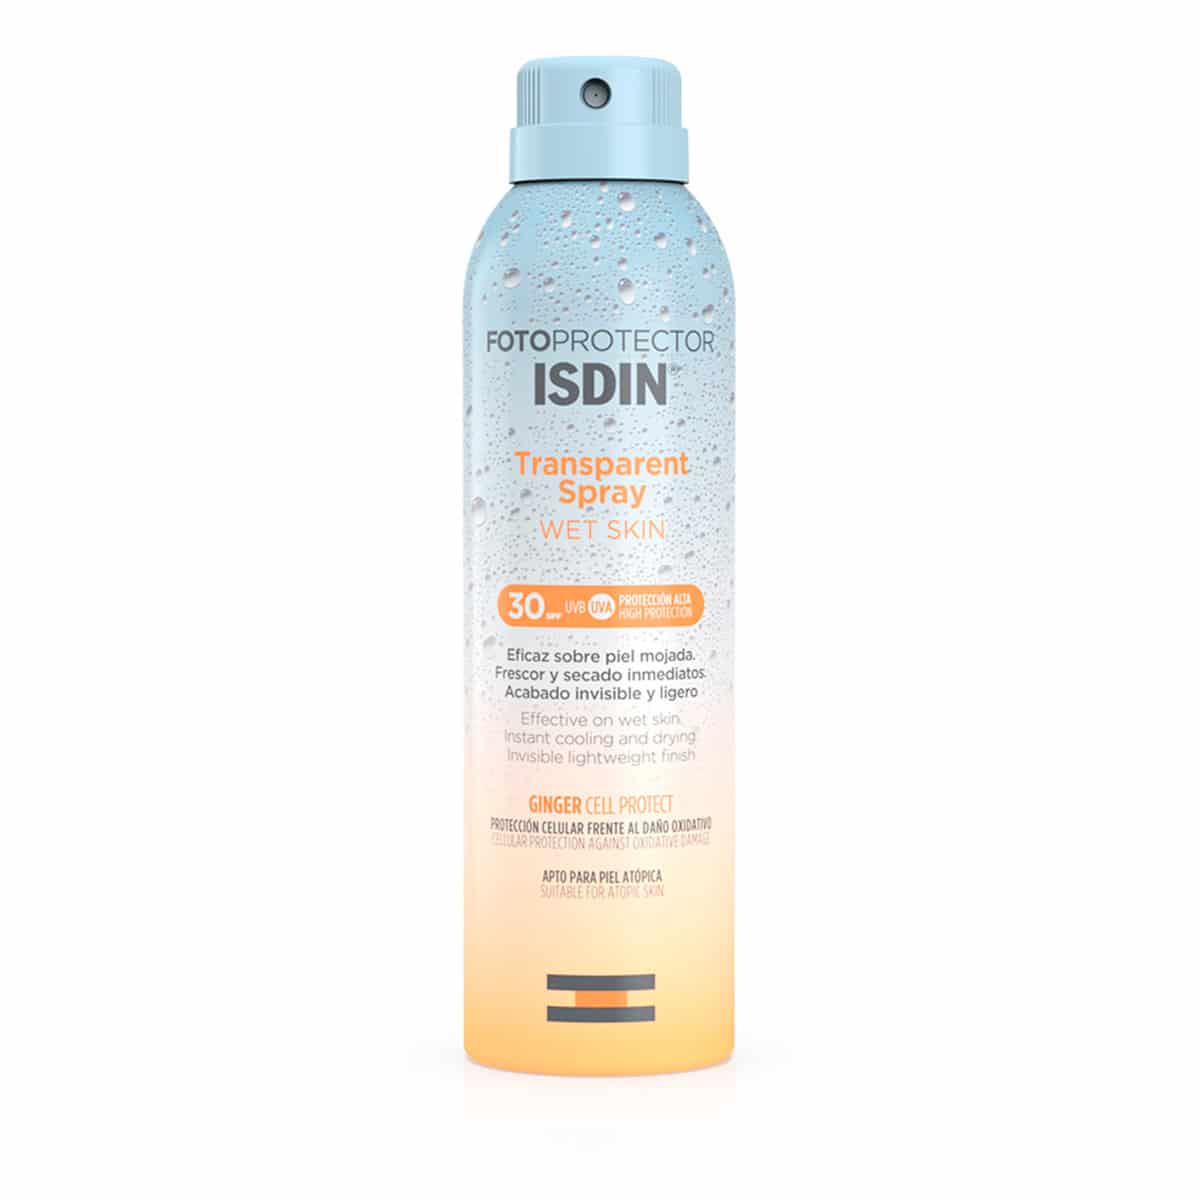 Isdin Fotoprotector Transparent Spray Wet Skin SPF 30